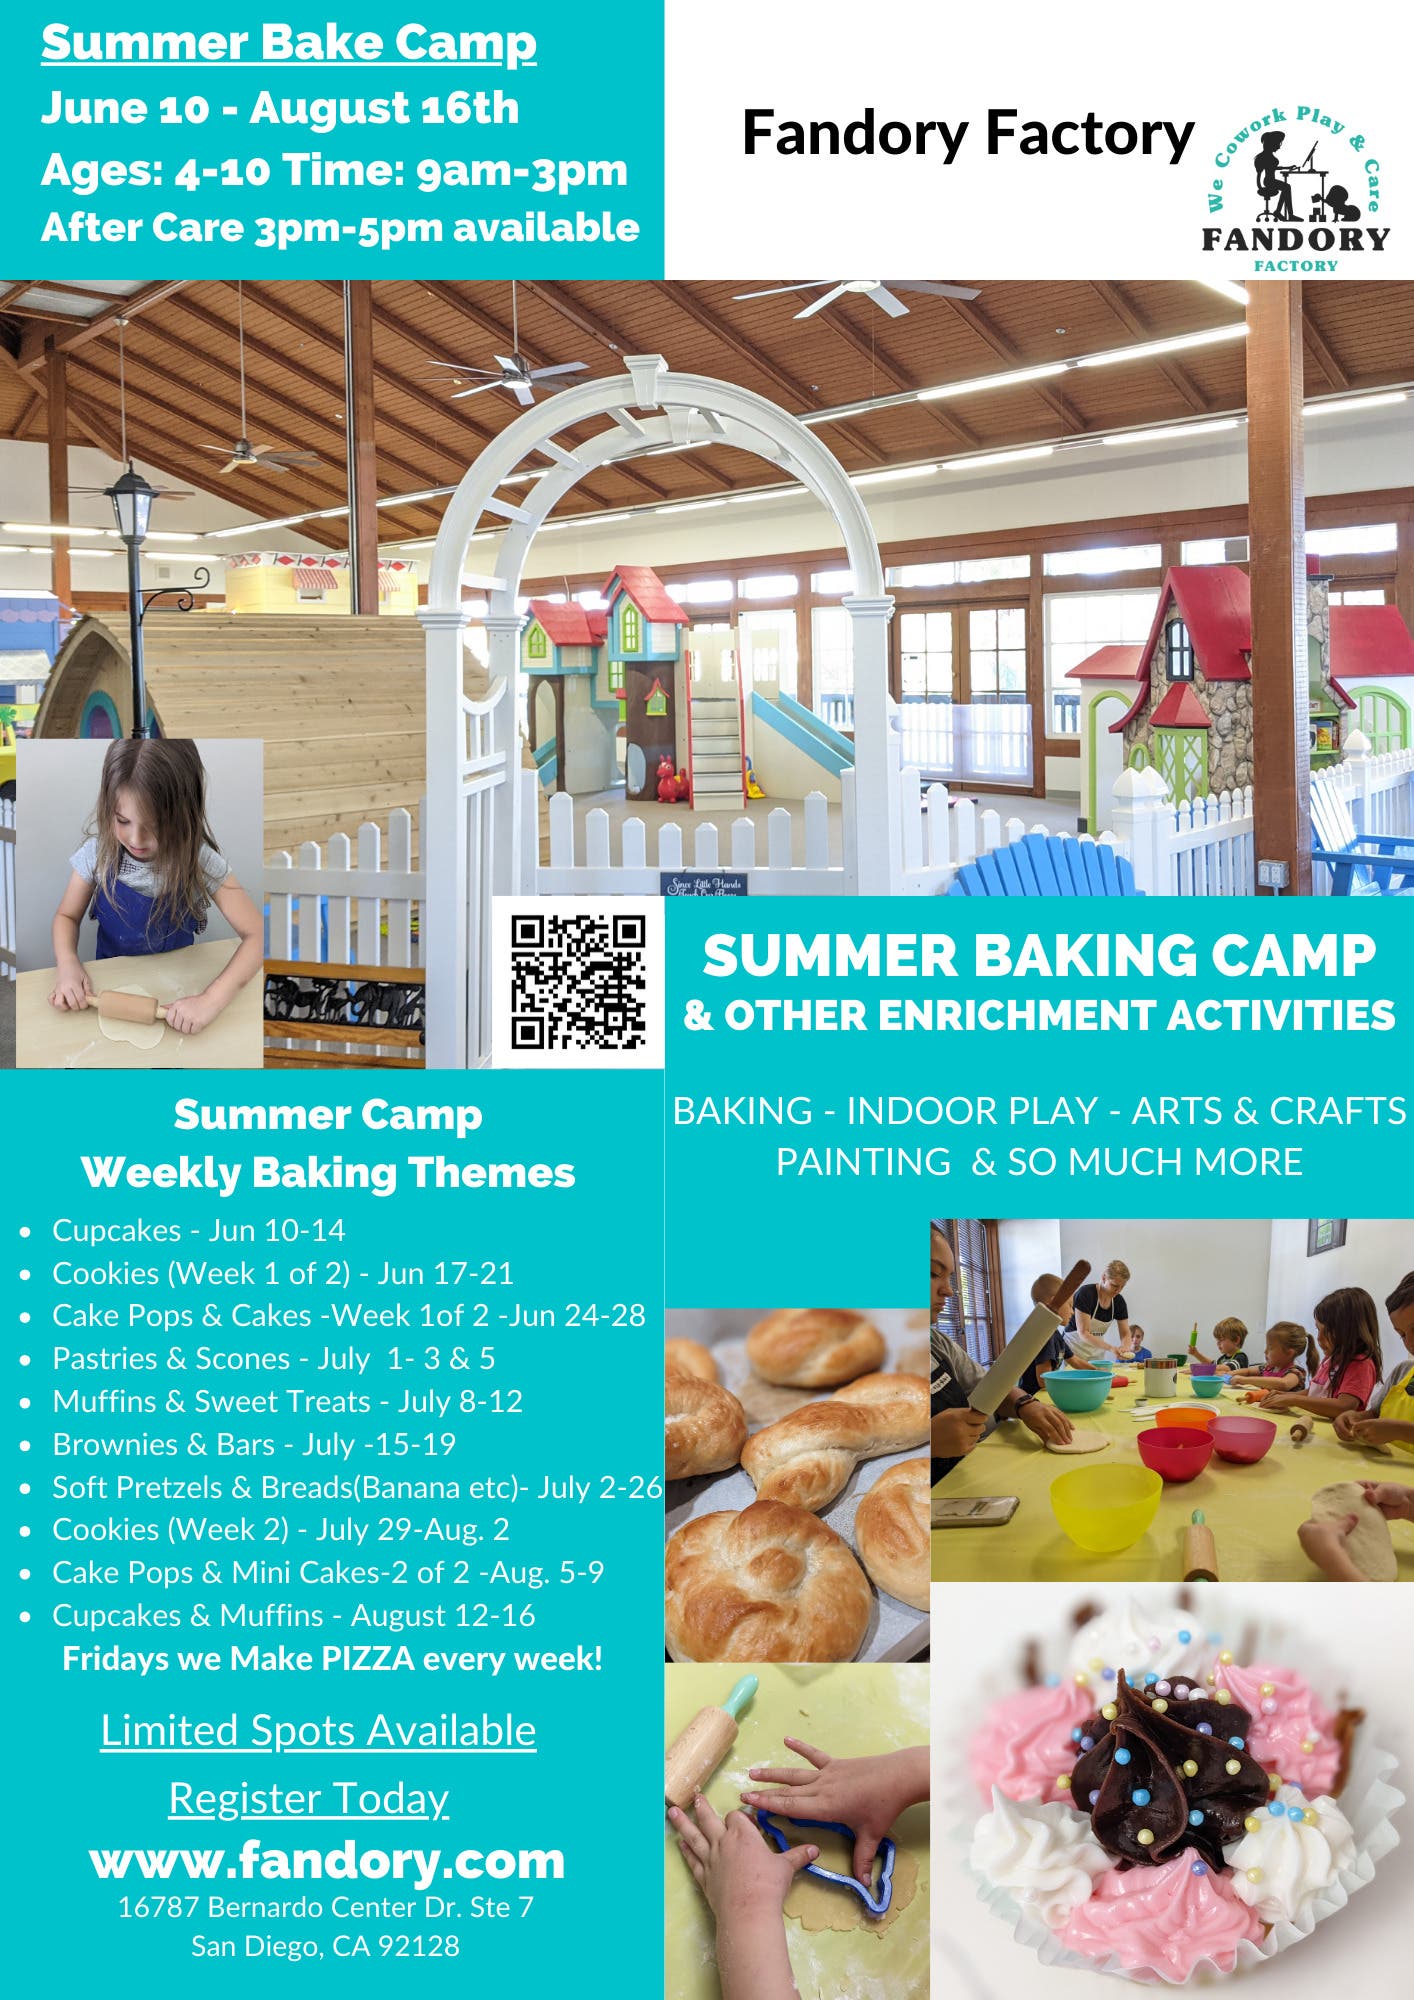 Summer Baking Camp - Cookies Week 2 at Fandory